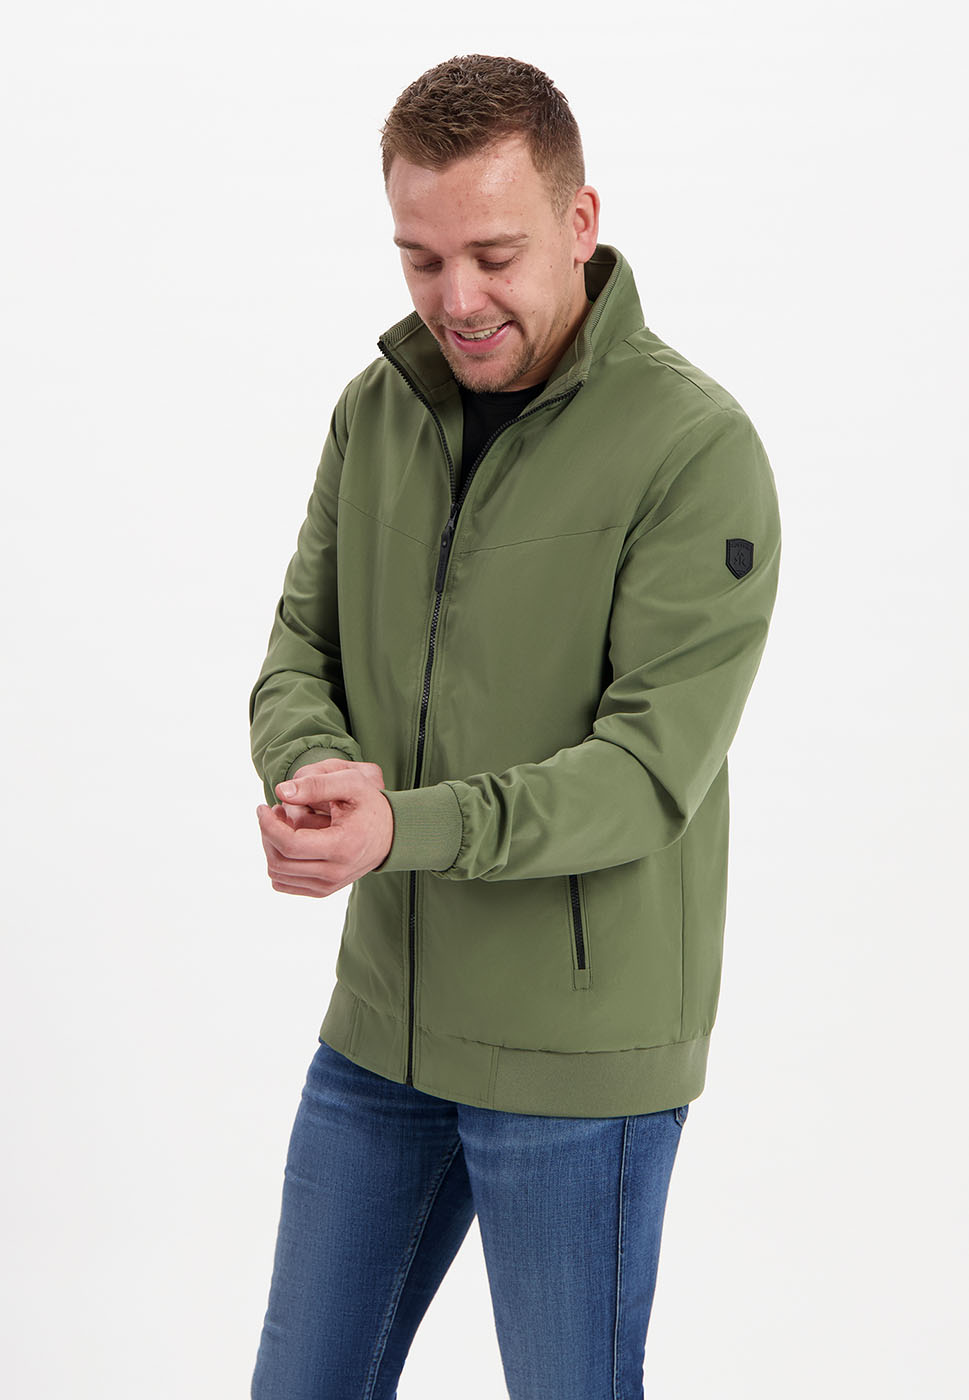 Kjelvik Scandinavian Clothing - Men Jackets Naud Green